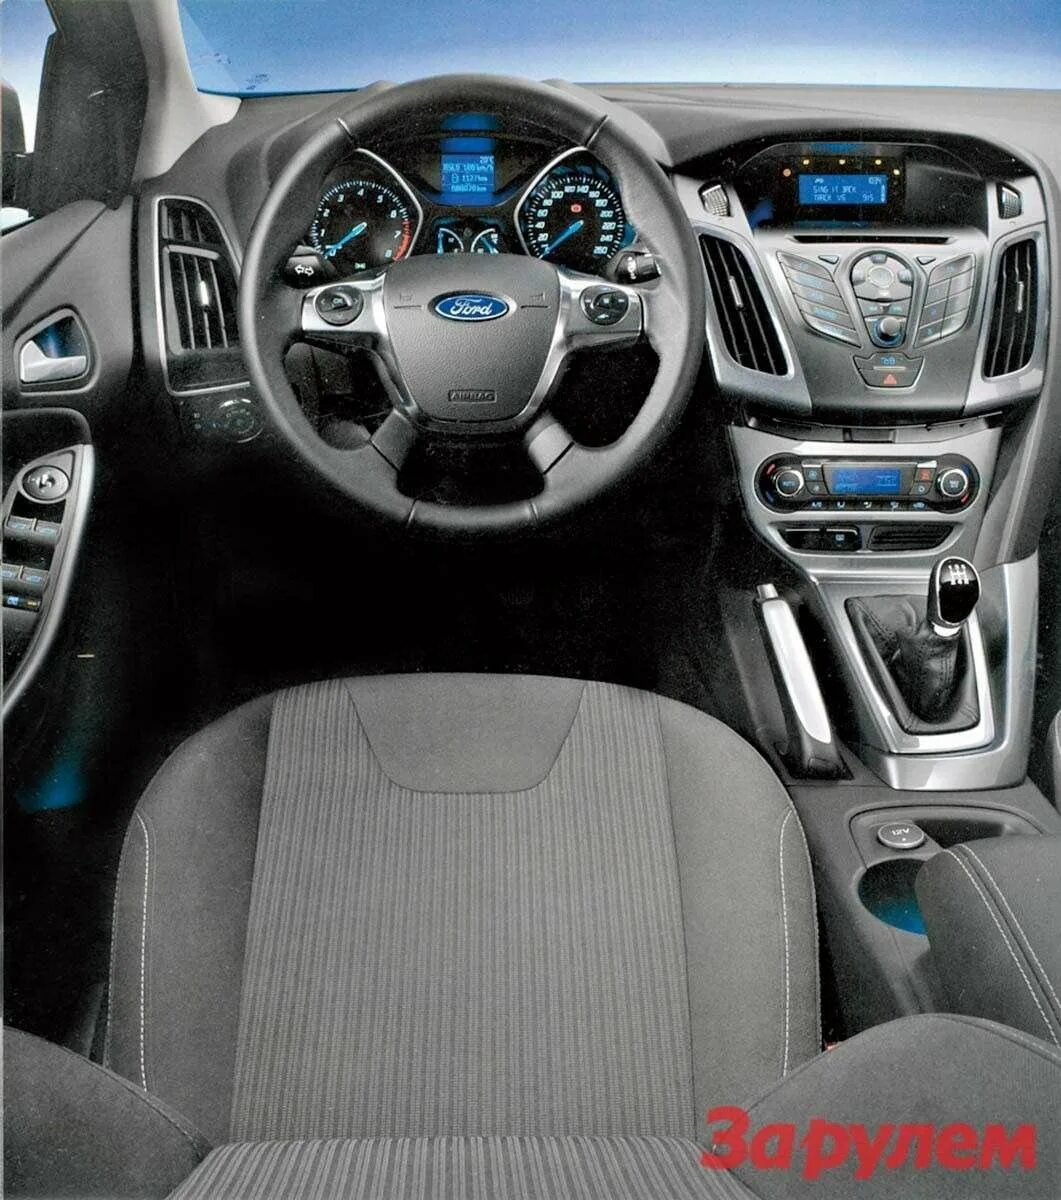 Ford Focus 2013 салон. Ford Focus 3 Titanium комплектация. Форд фокус 2012 салон. Форд фокус 3 седан салон. Форд фокус 3 количество